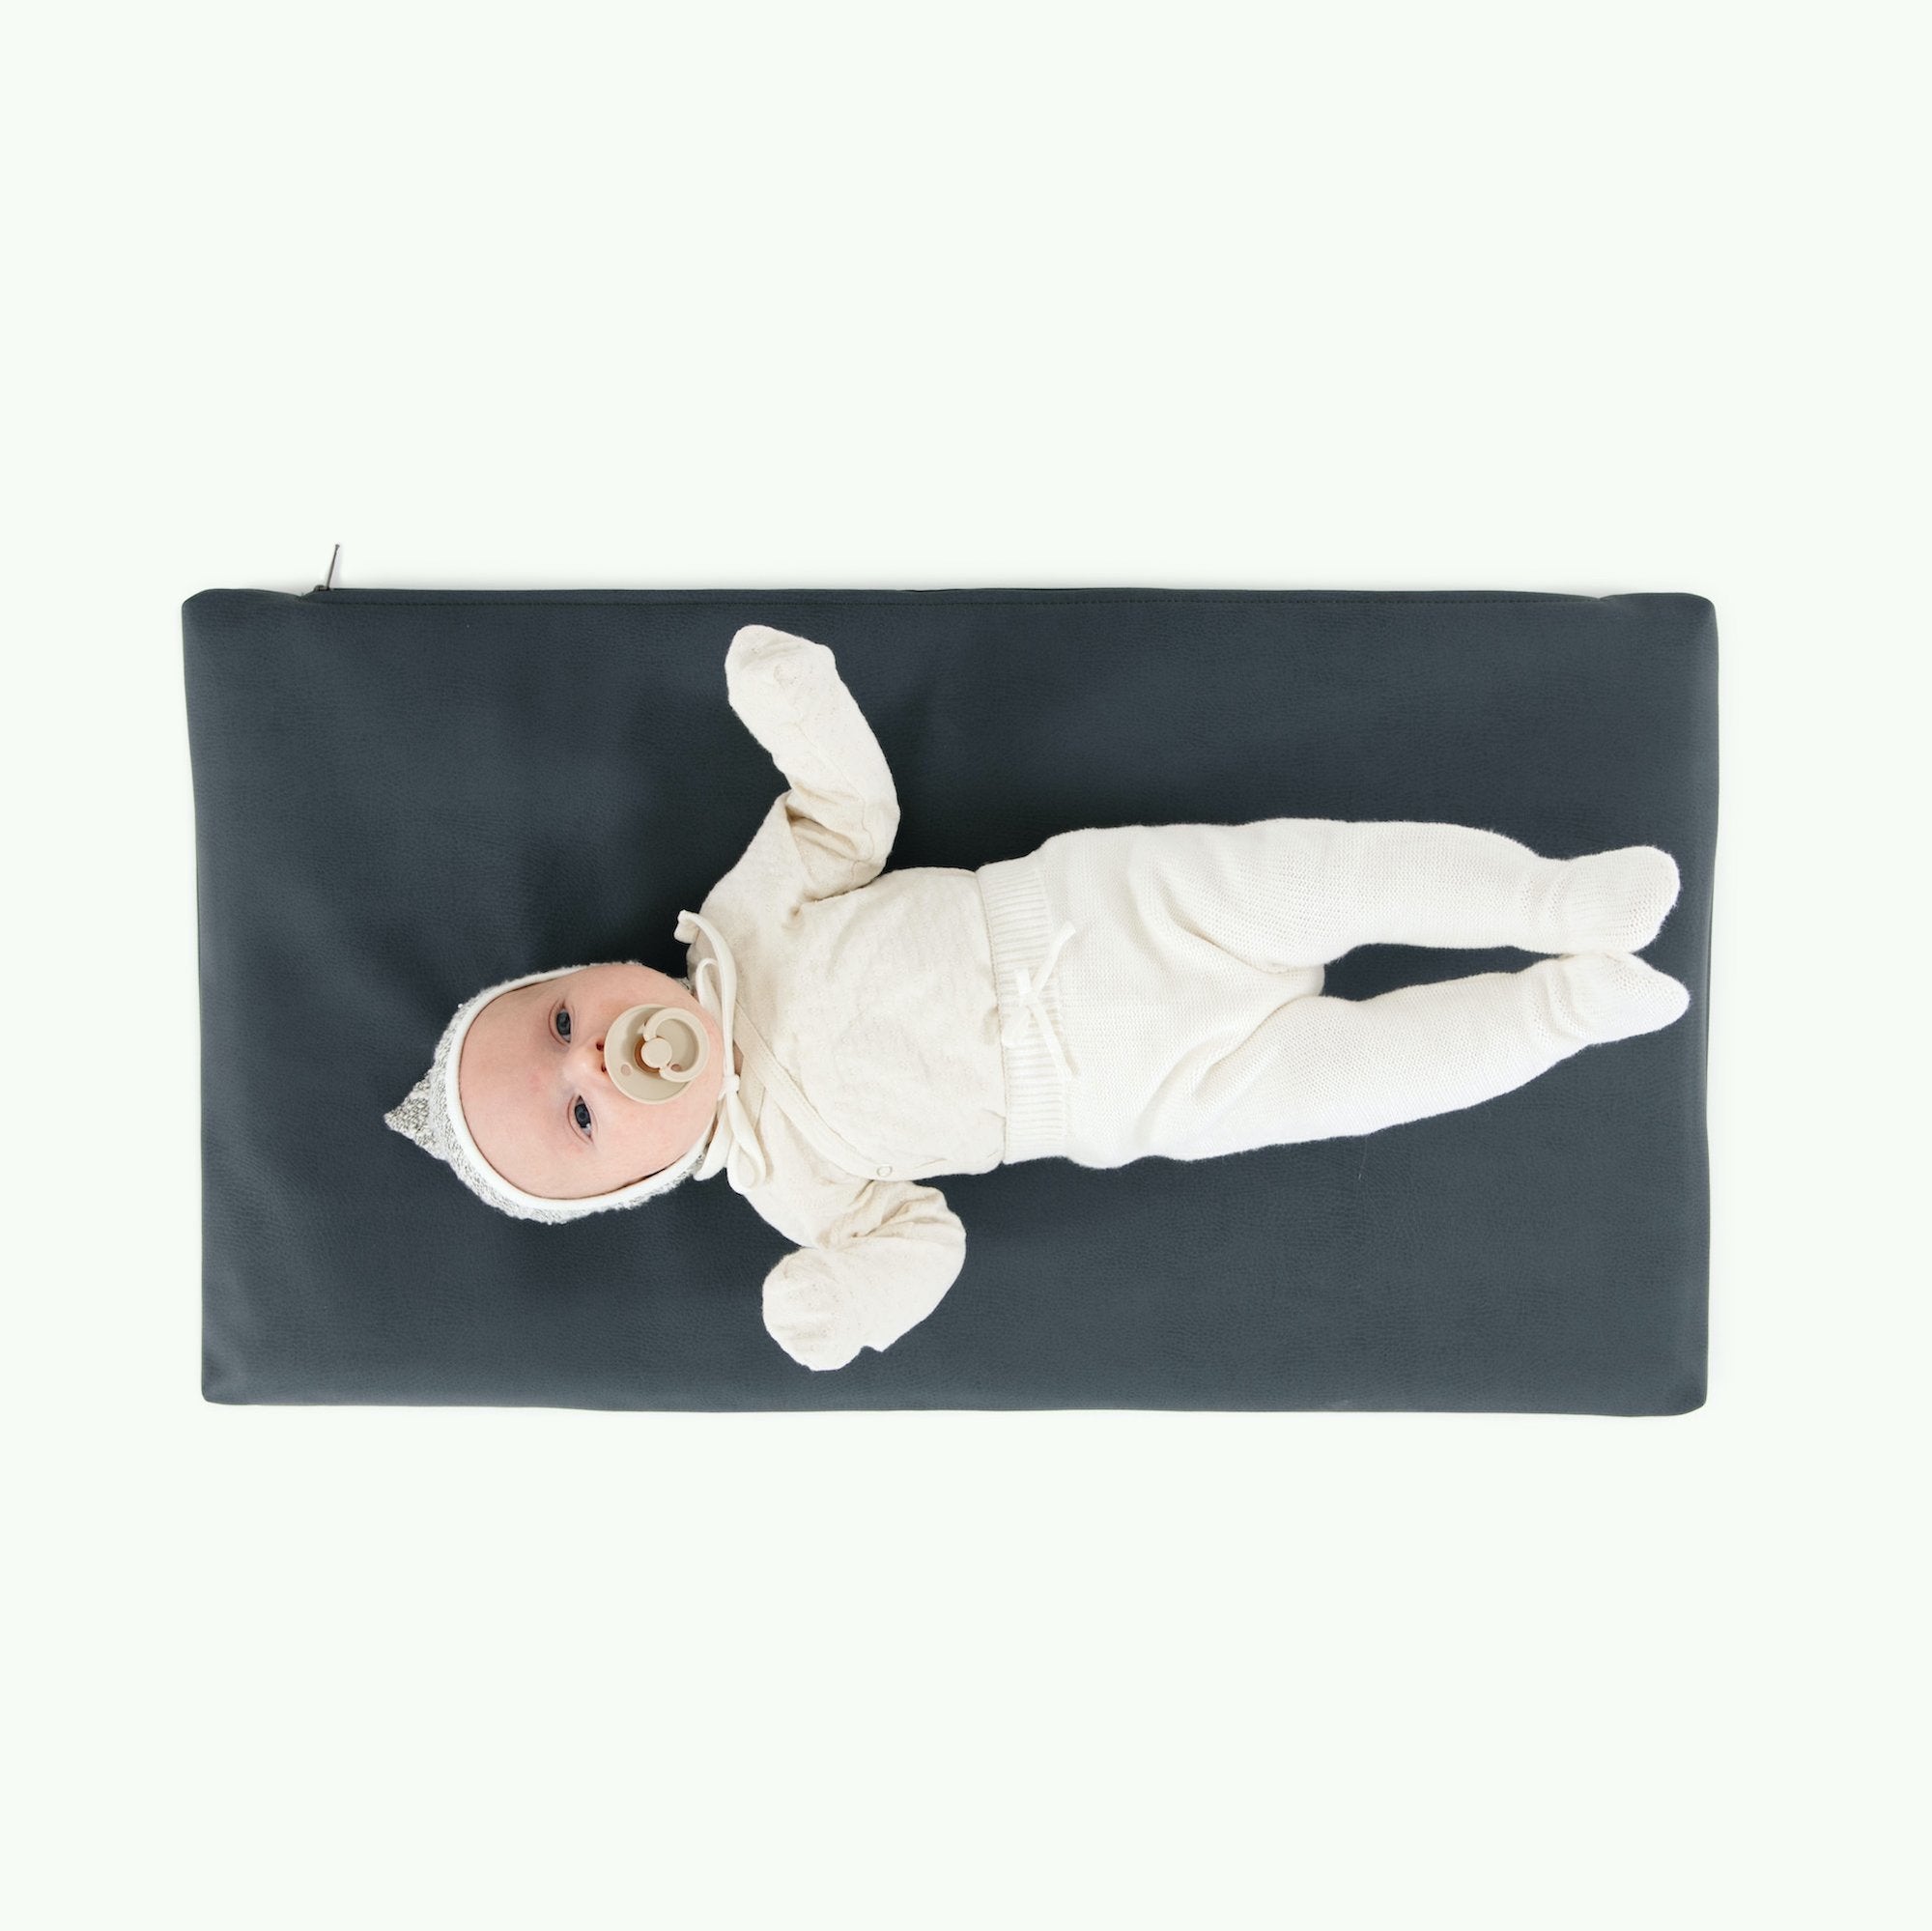 Nightfall (on sale)@overhead image of baby on nightfall padded micro+